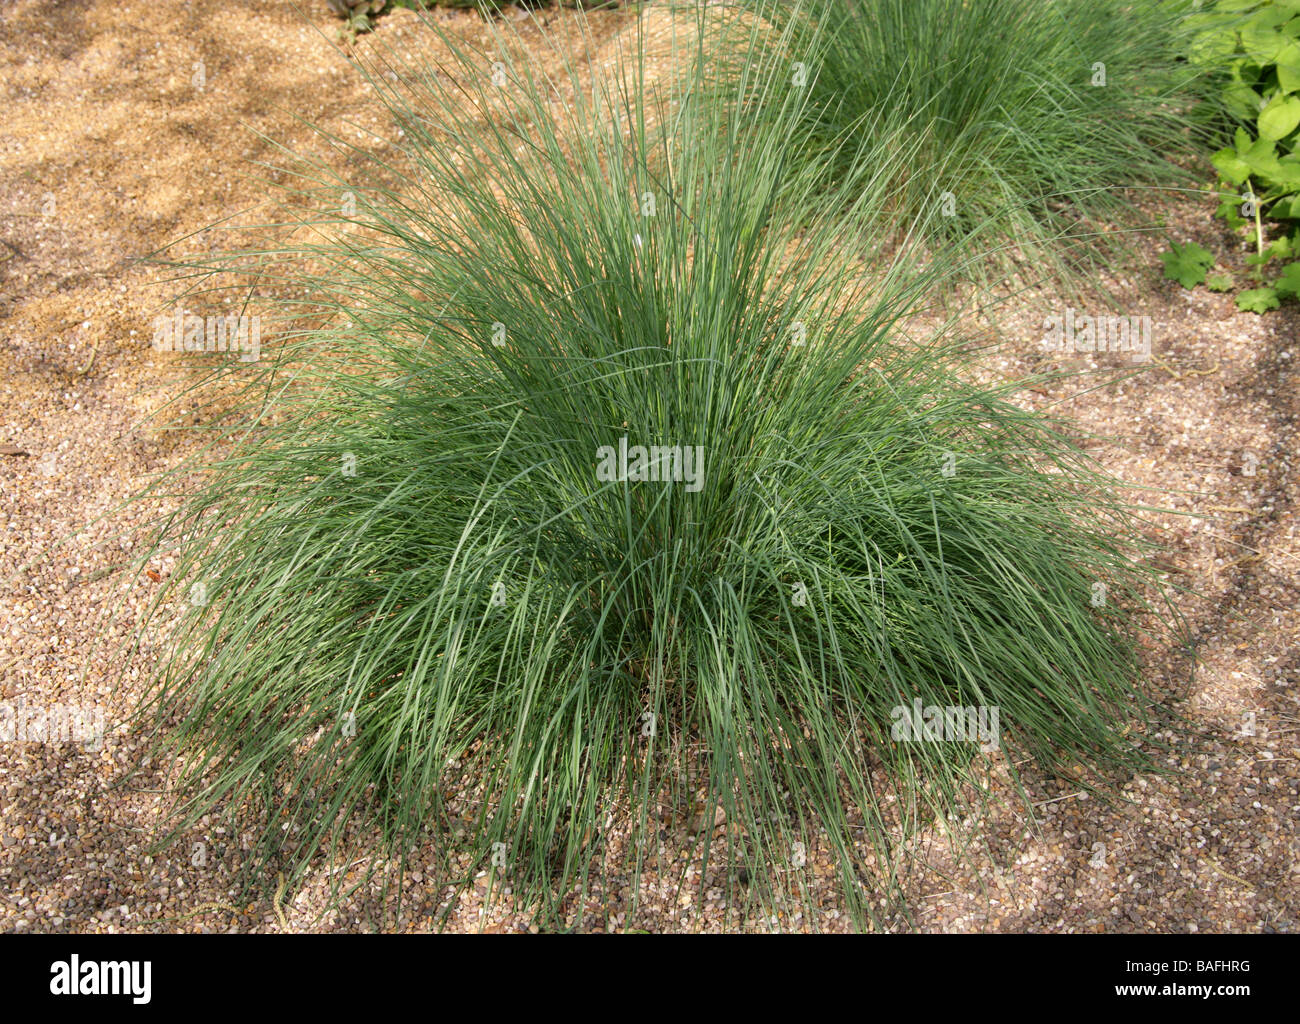 Large or Common Tussock Grass, Poa labillardieri, Poaceae, Australia Stock Photo